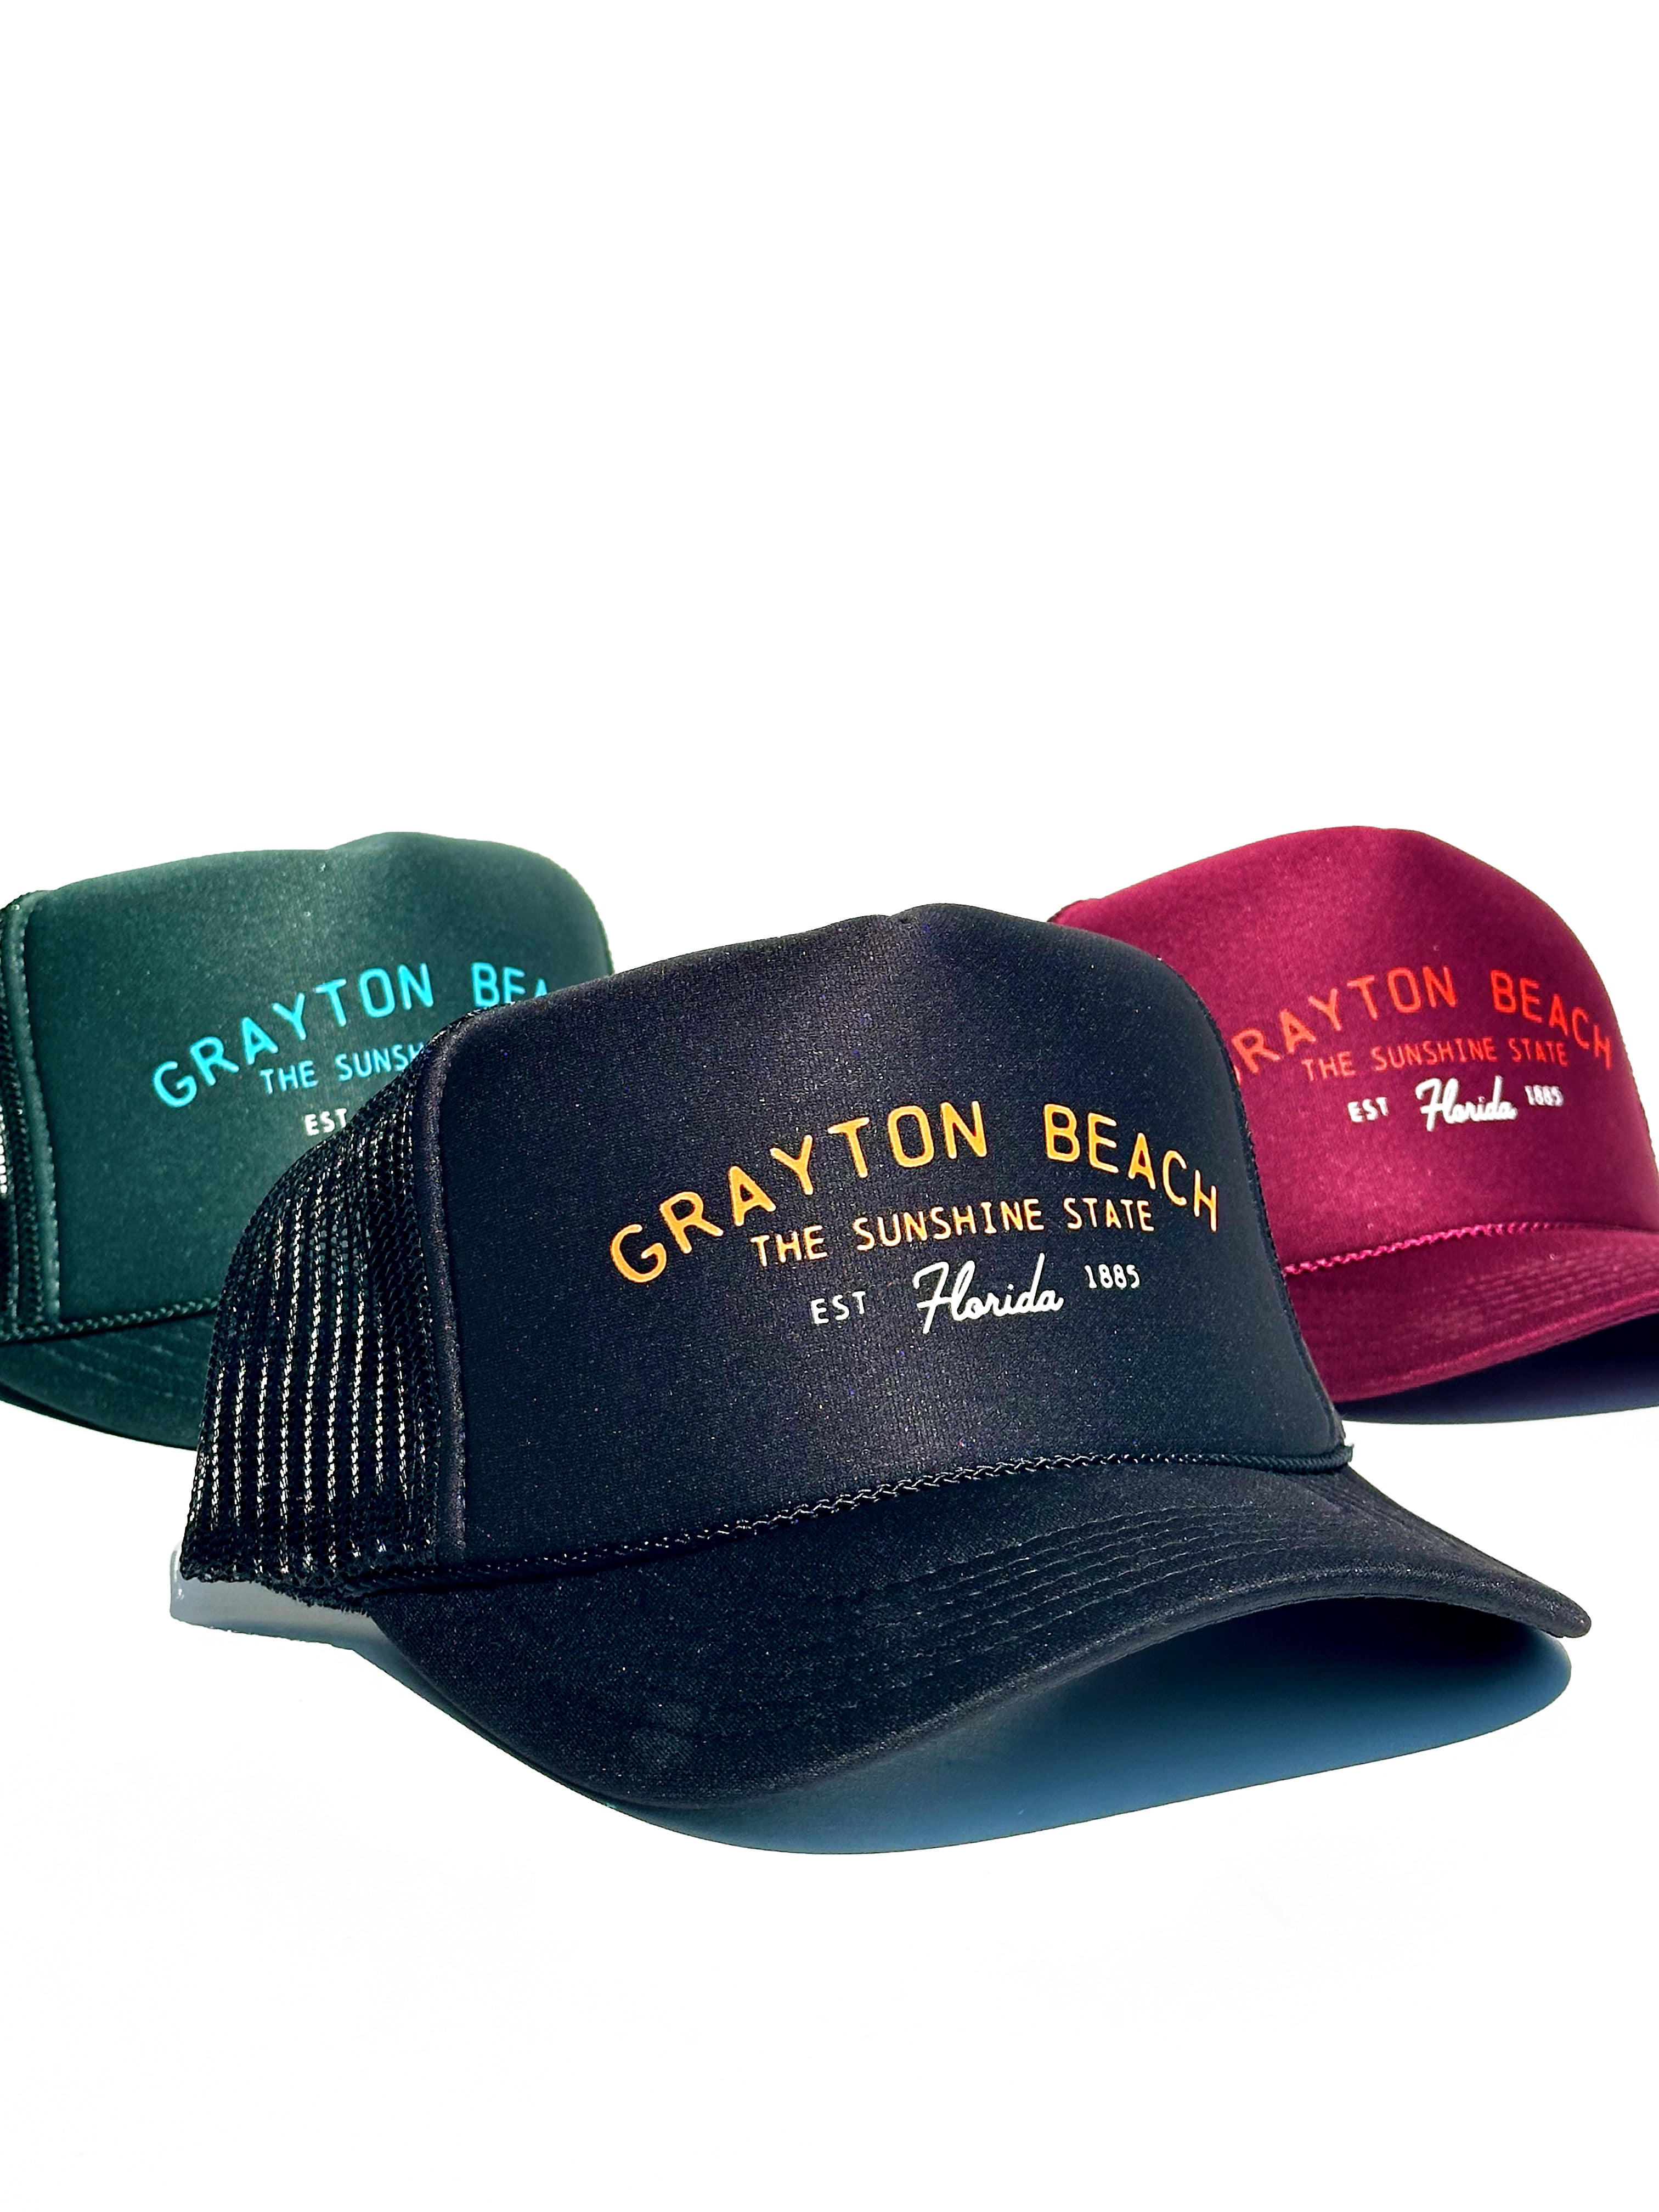 Grayton Beach Trucker Hat